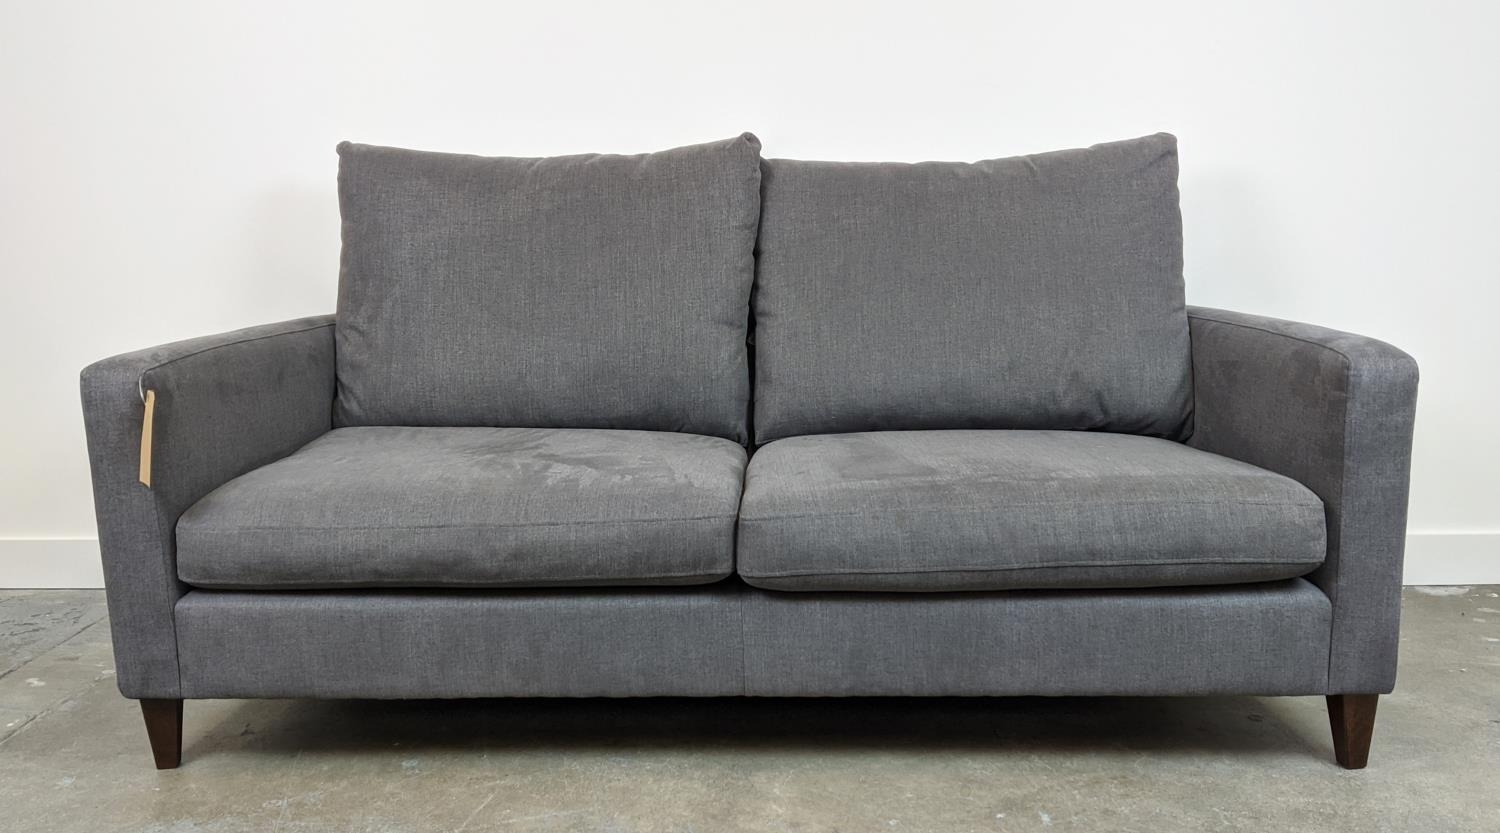 SOFA, grey upholstery, 78cm H x 188cm W. - Image 2 of 8